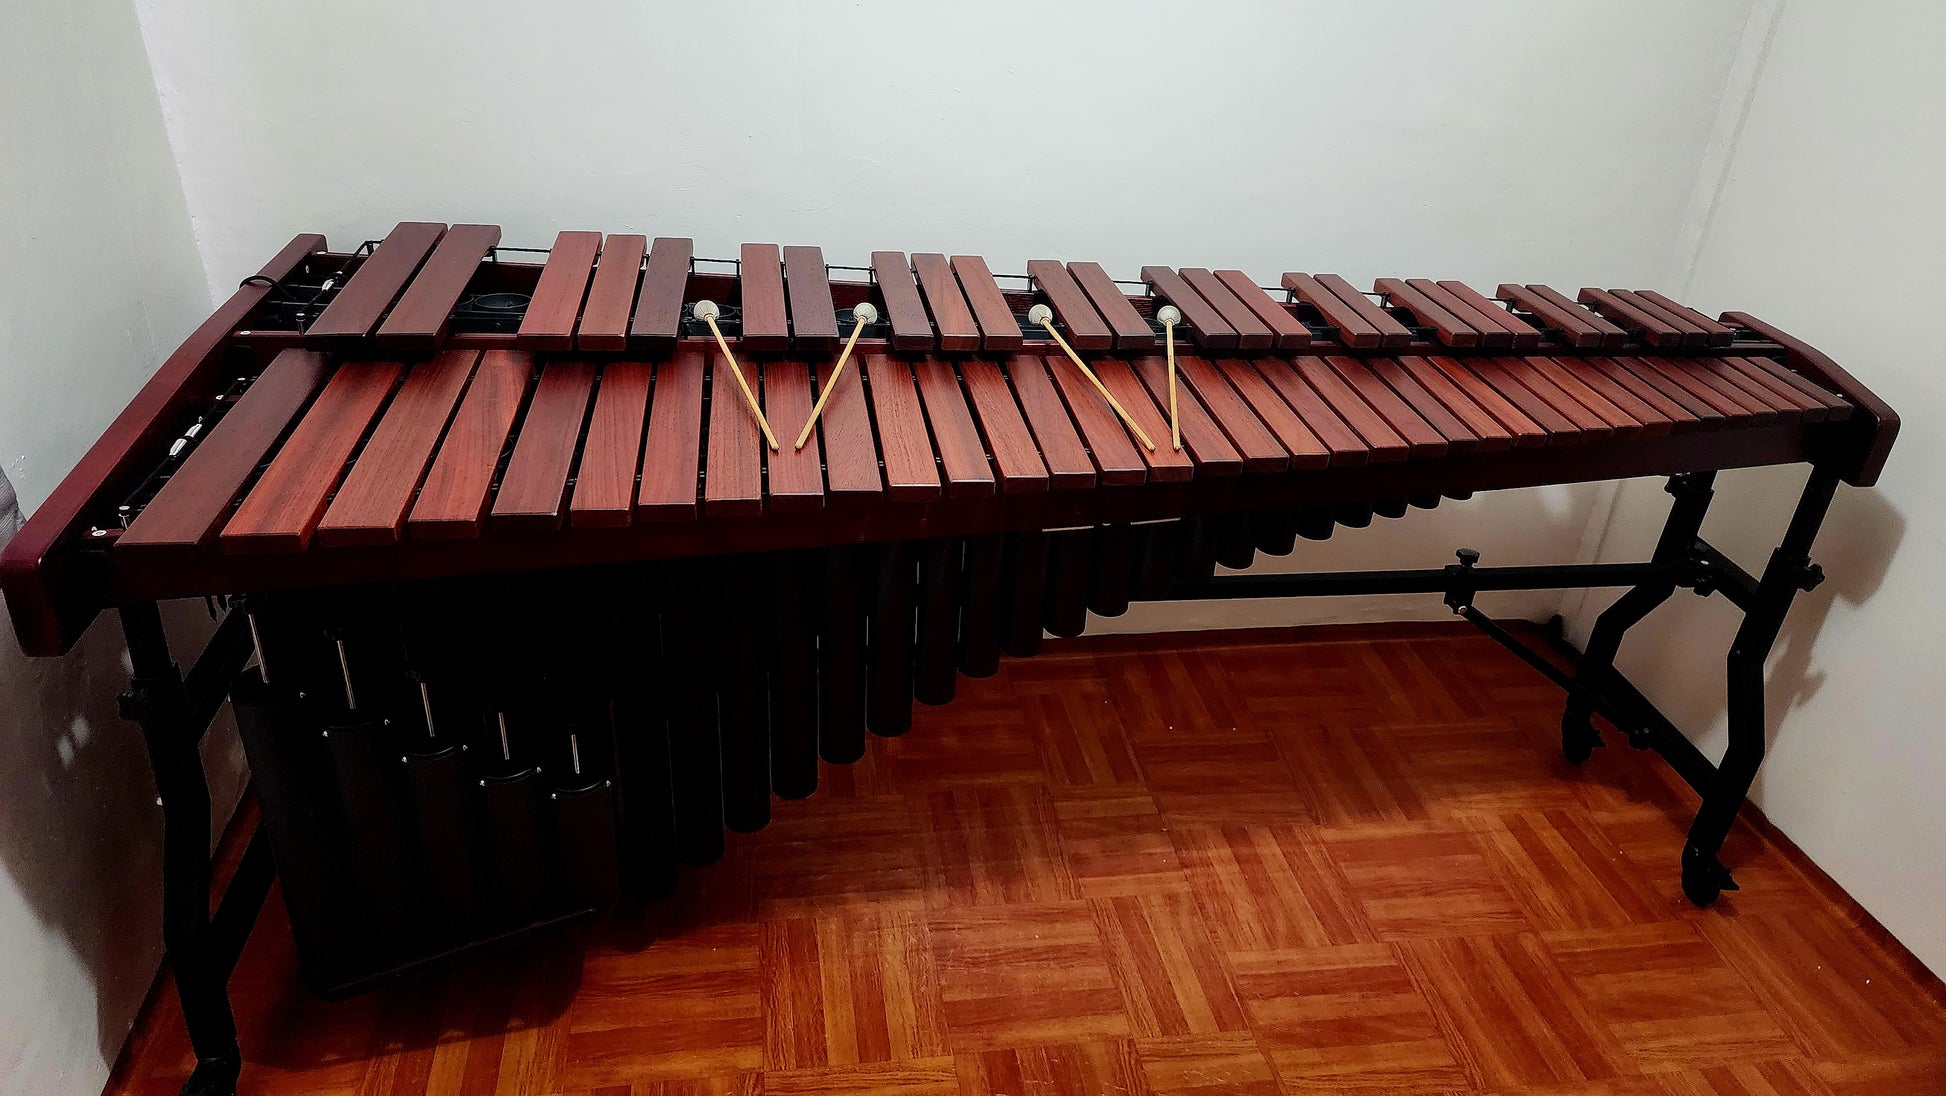 Monkmanstudios "MK-Omnia" 5 Octave Rosewood Marimba